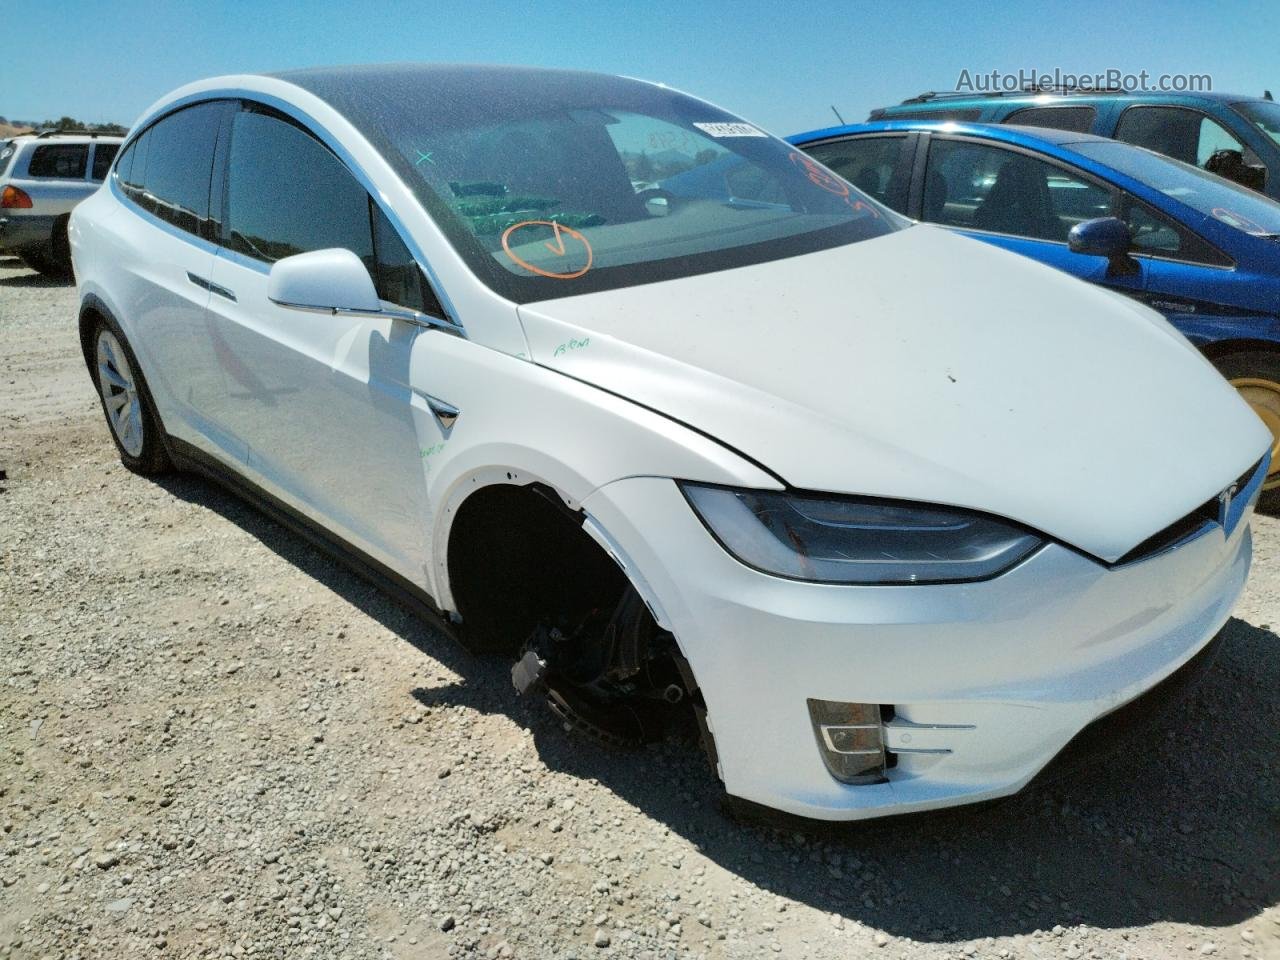 2019 Tesla Model X  Белый vin: 5YJXCDE23KF206621